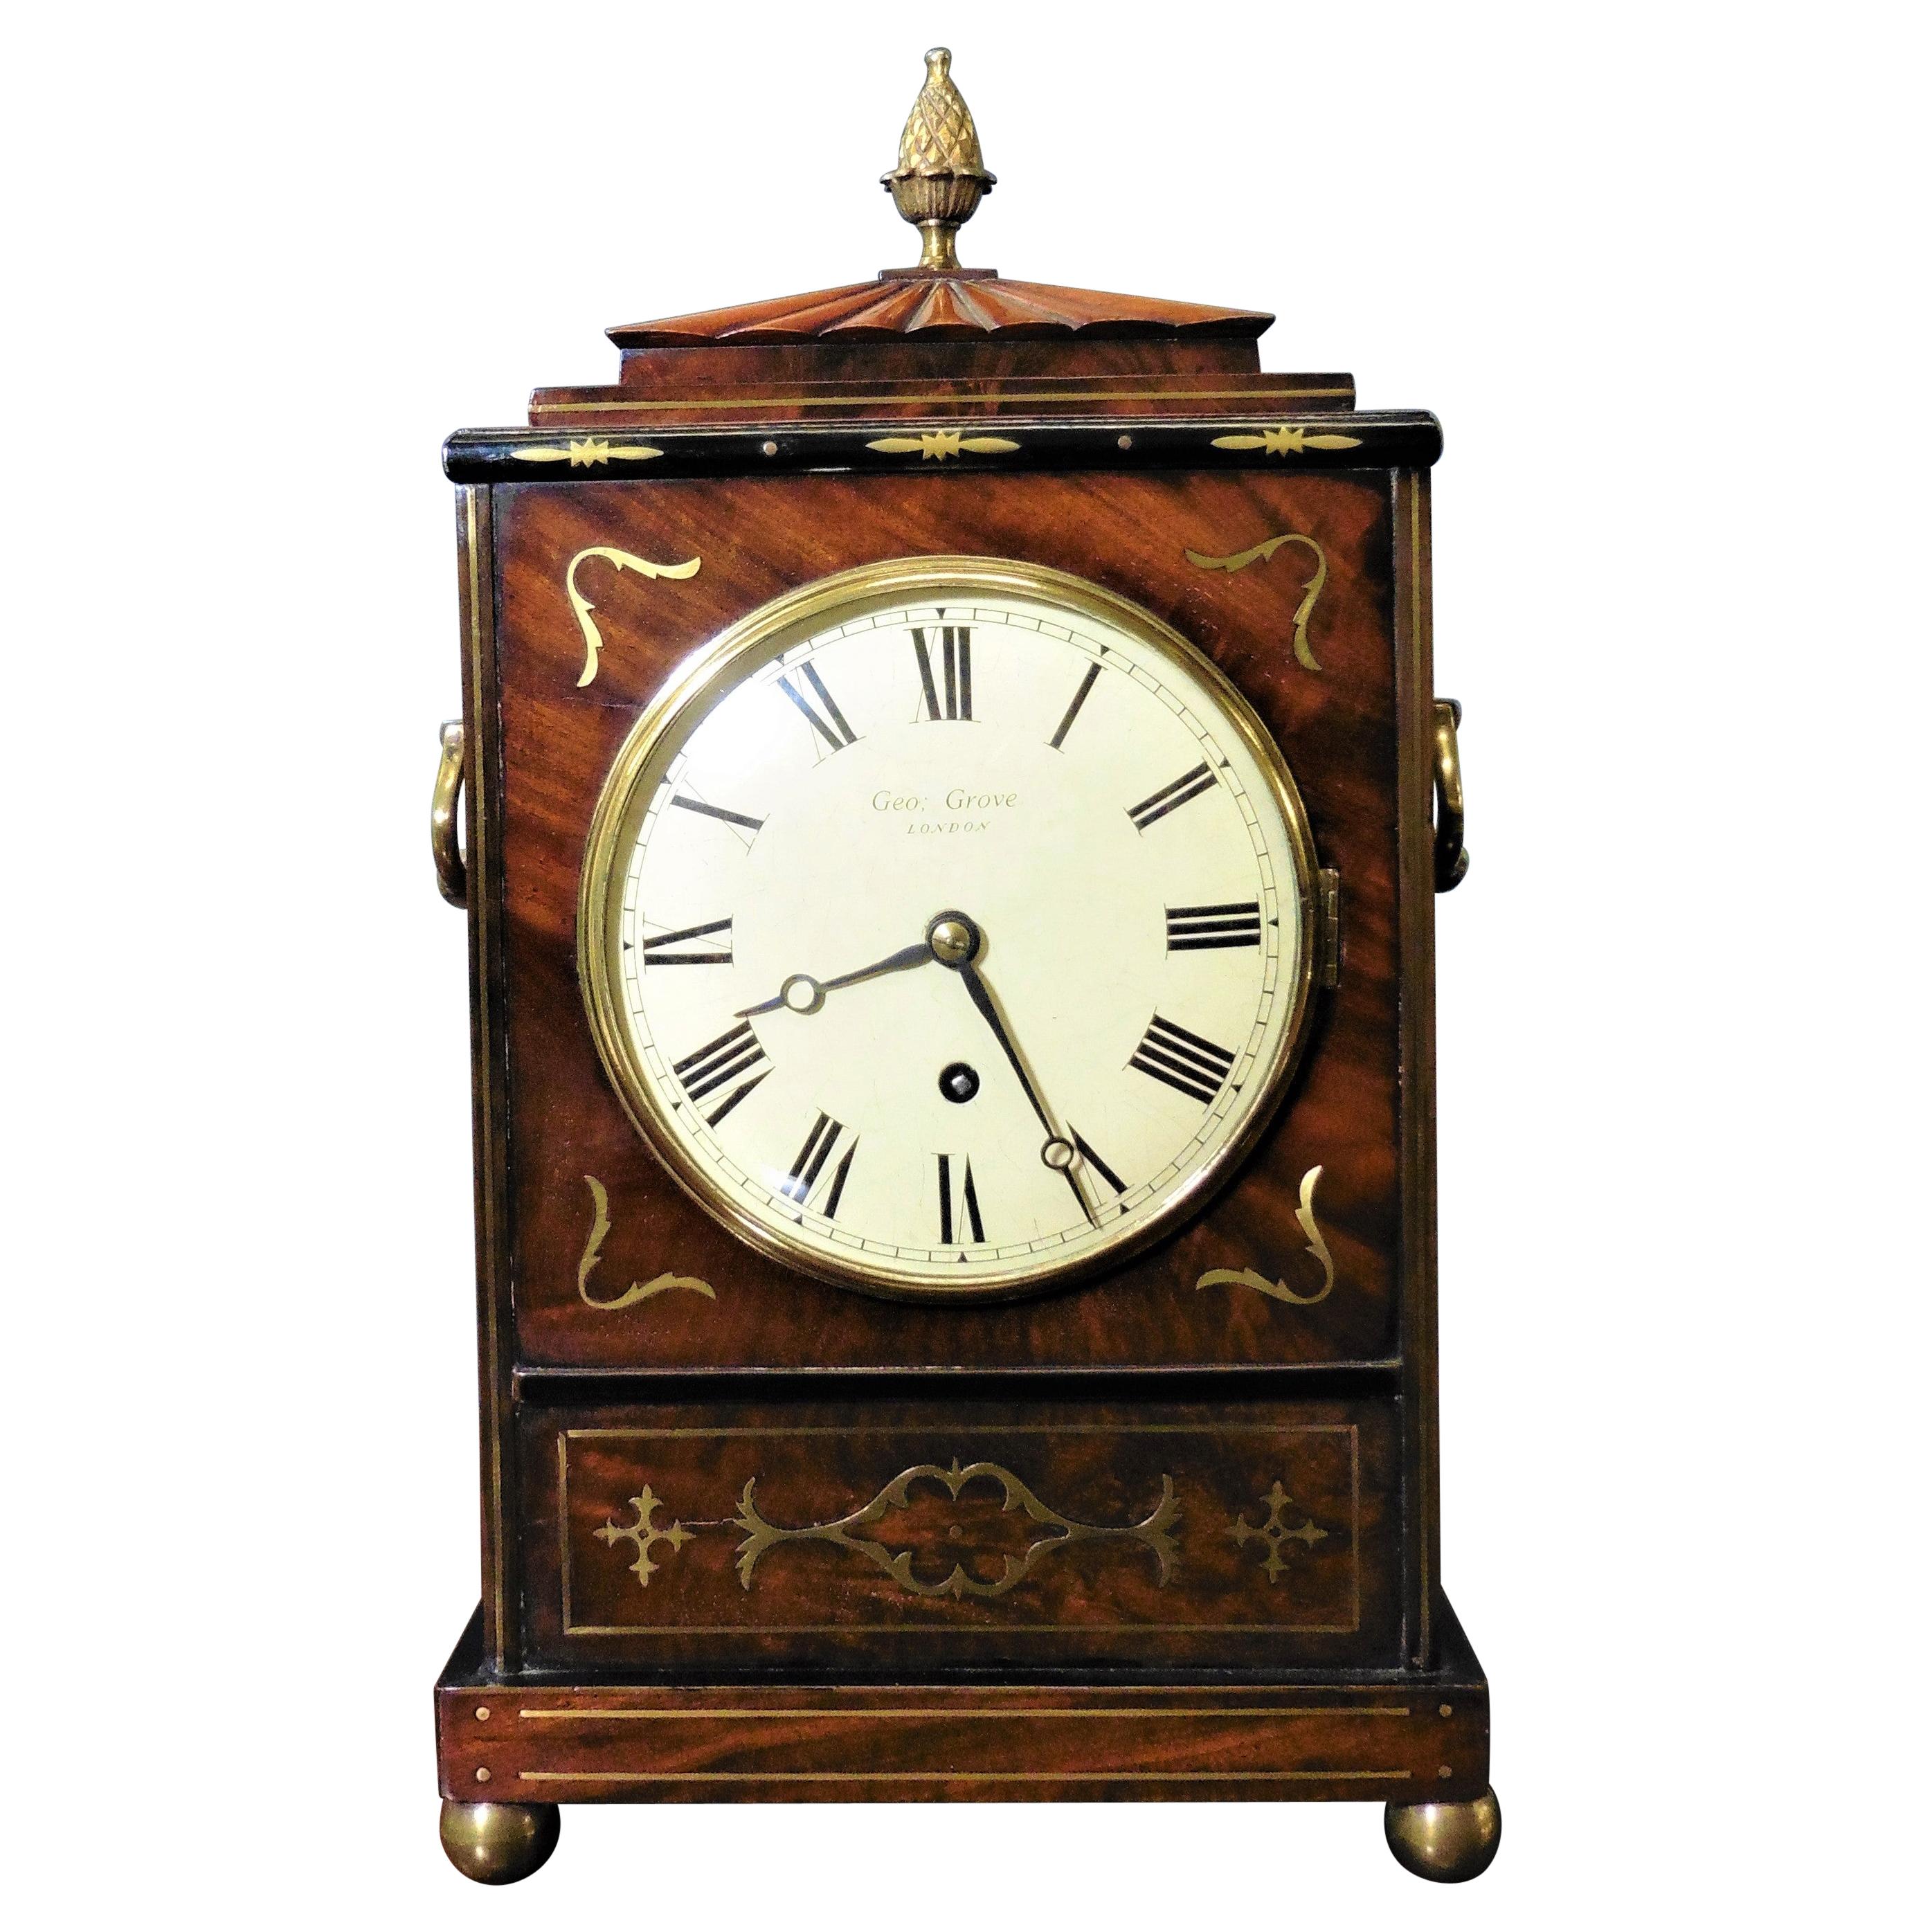 Regency Mahogany Bracket Clock by George Grove, London